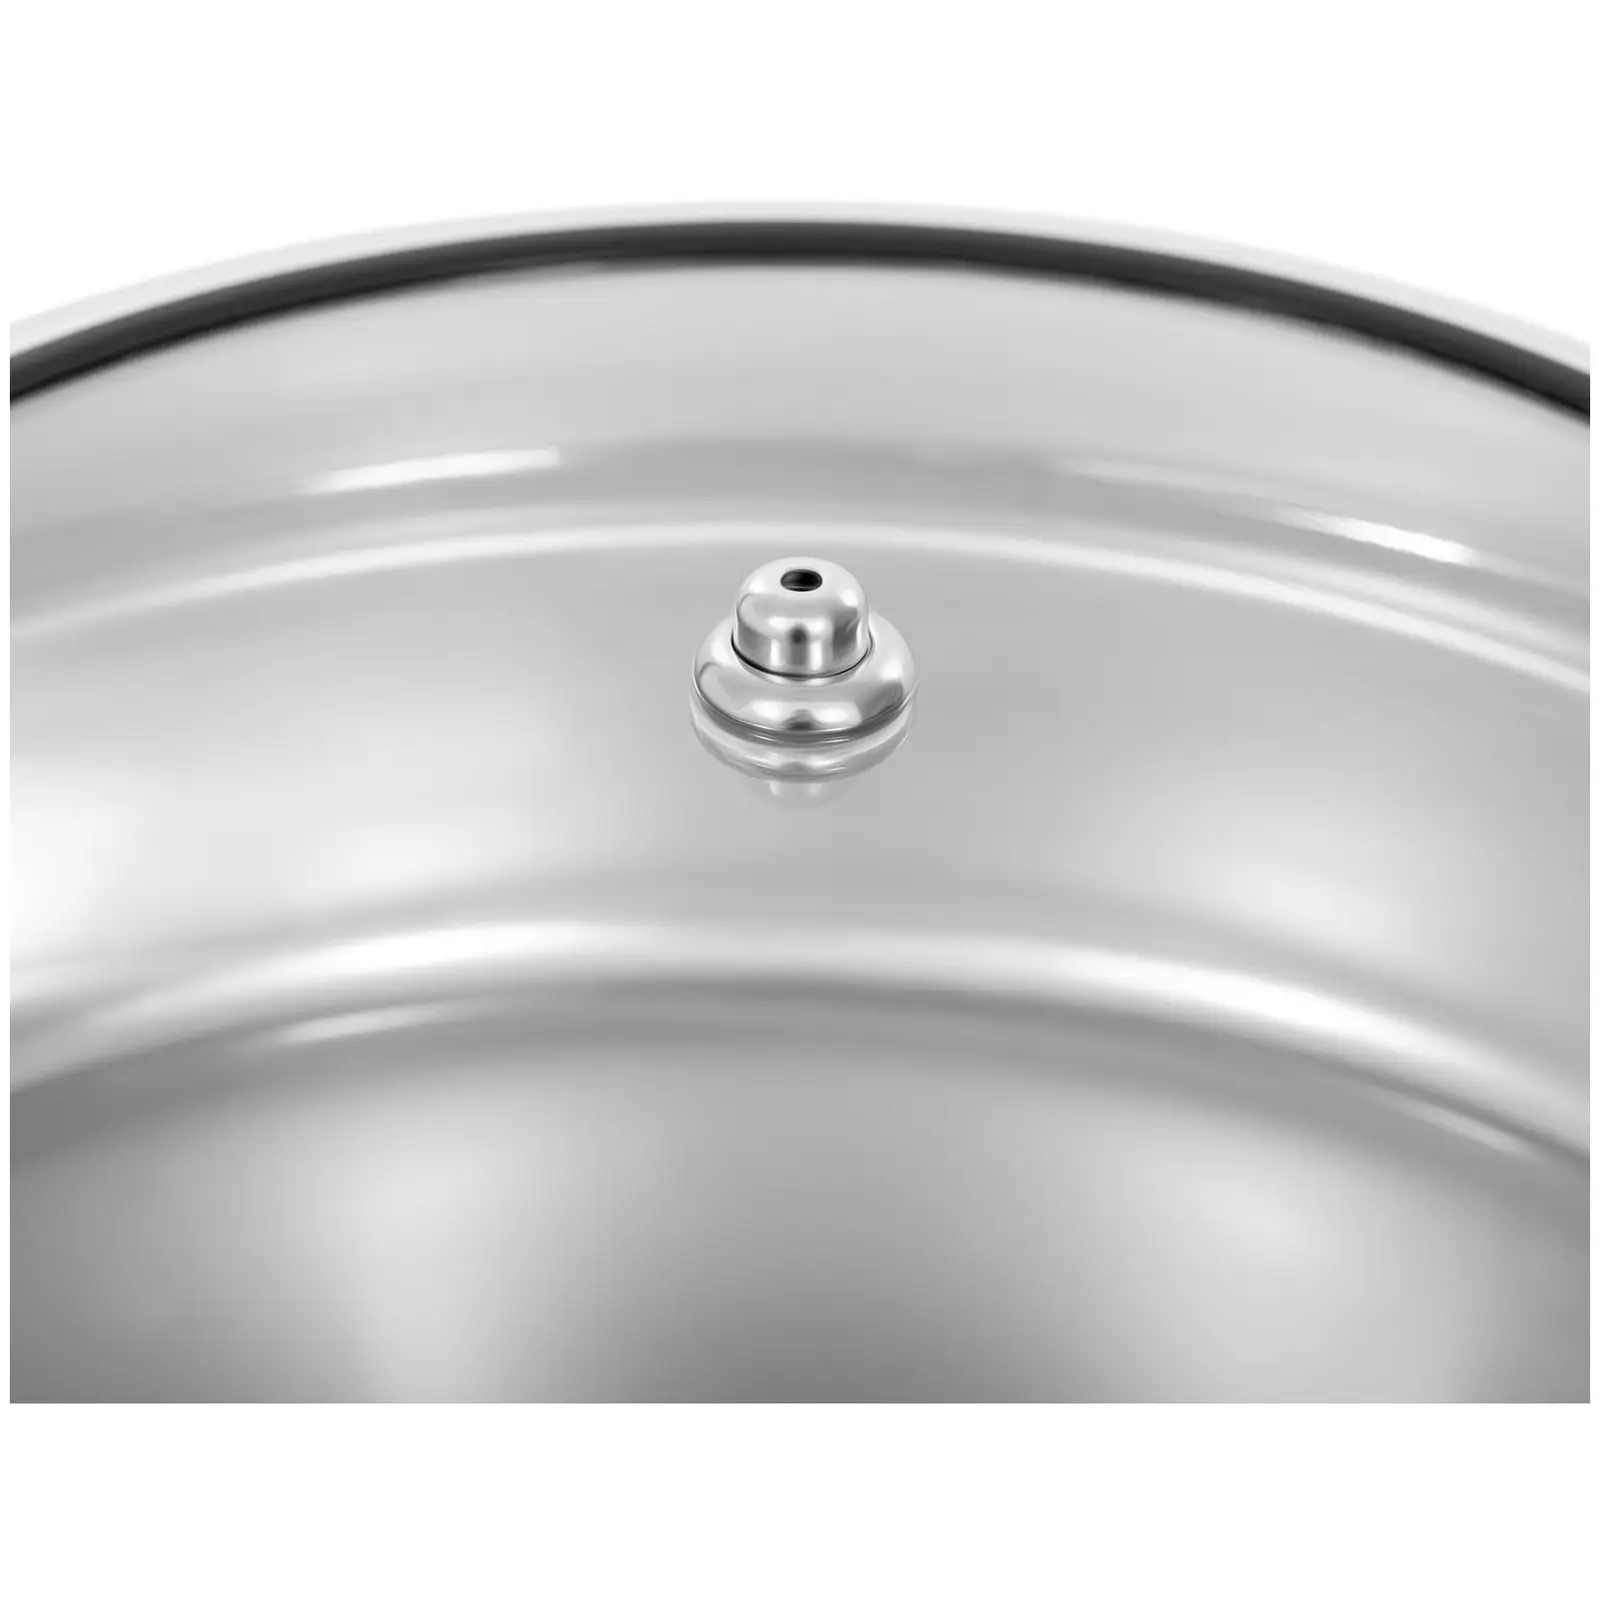 B-Ware Chafing Dish - rund mit Sichtfenster - Royal Catering - 5,5 L